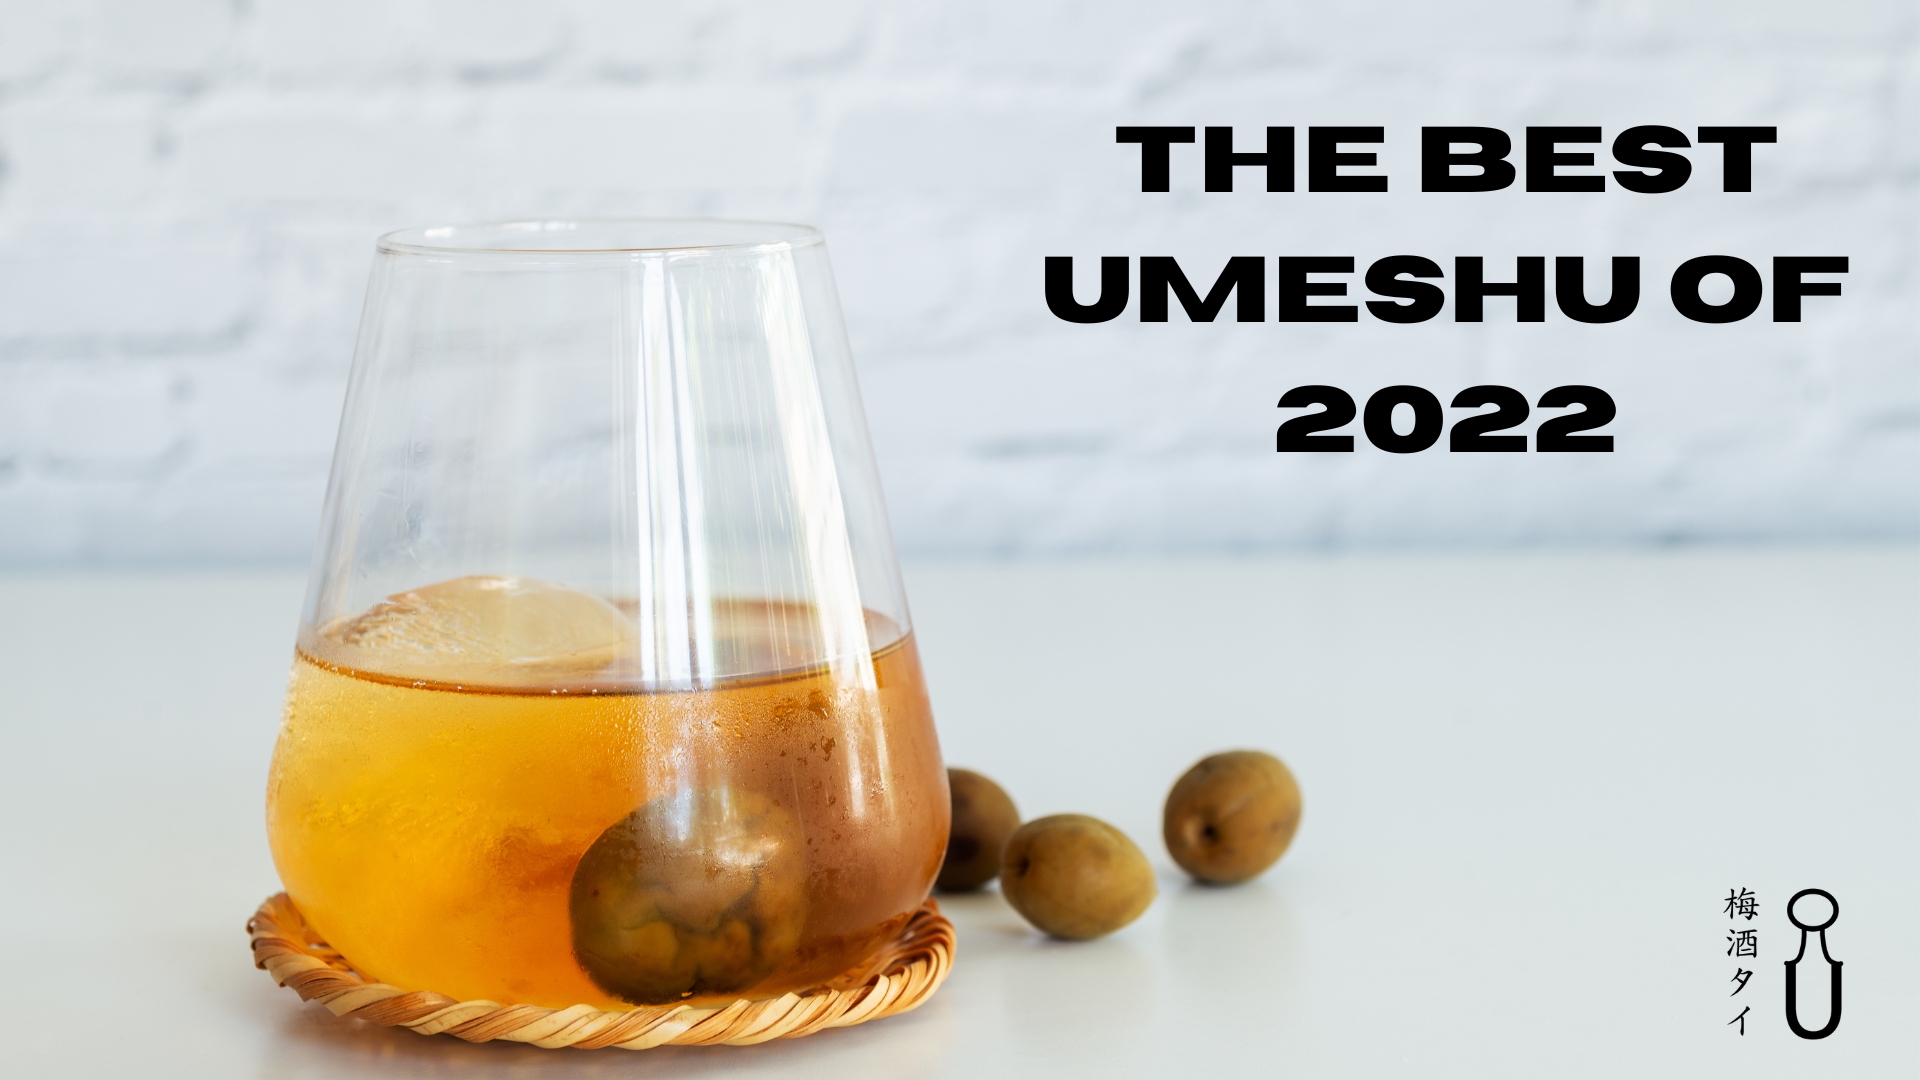 The Best Umeshu of 2022